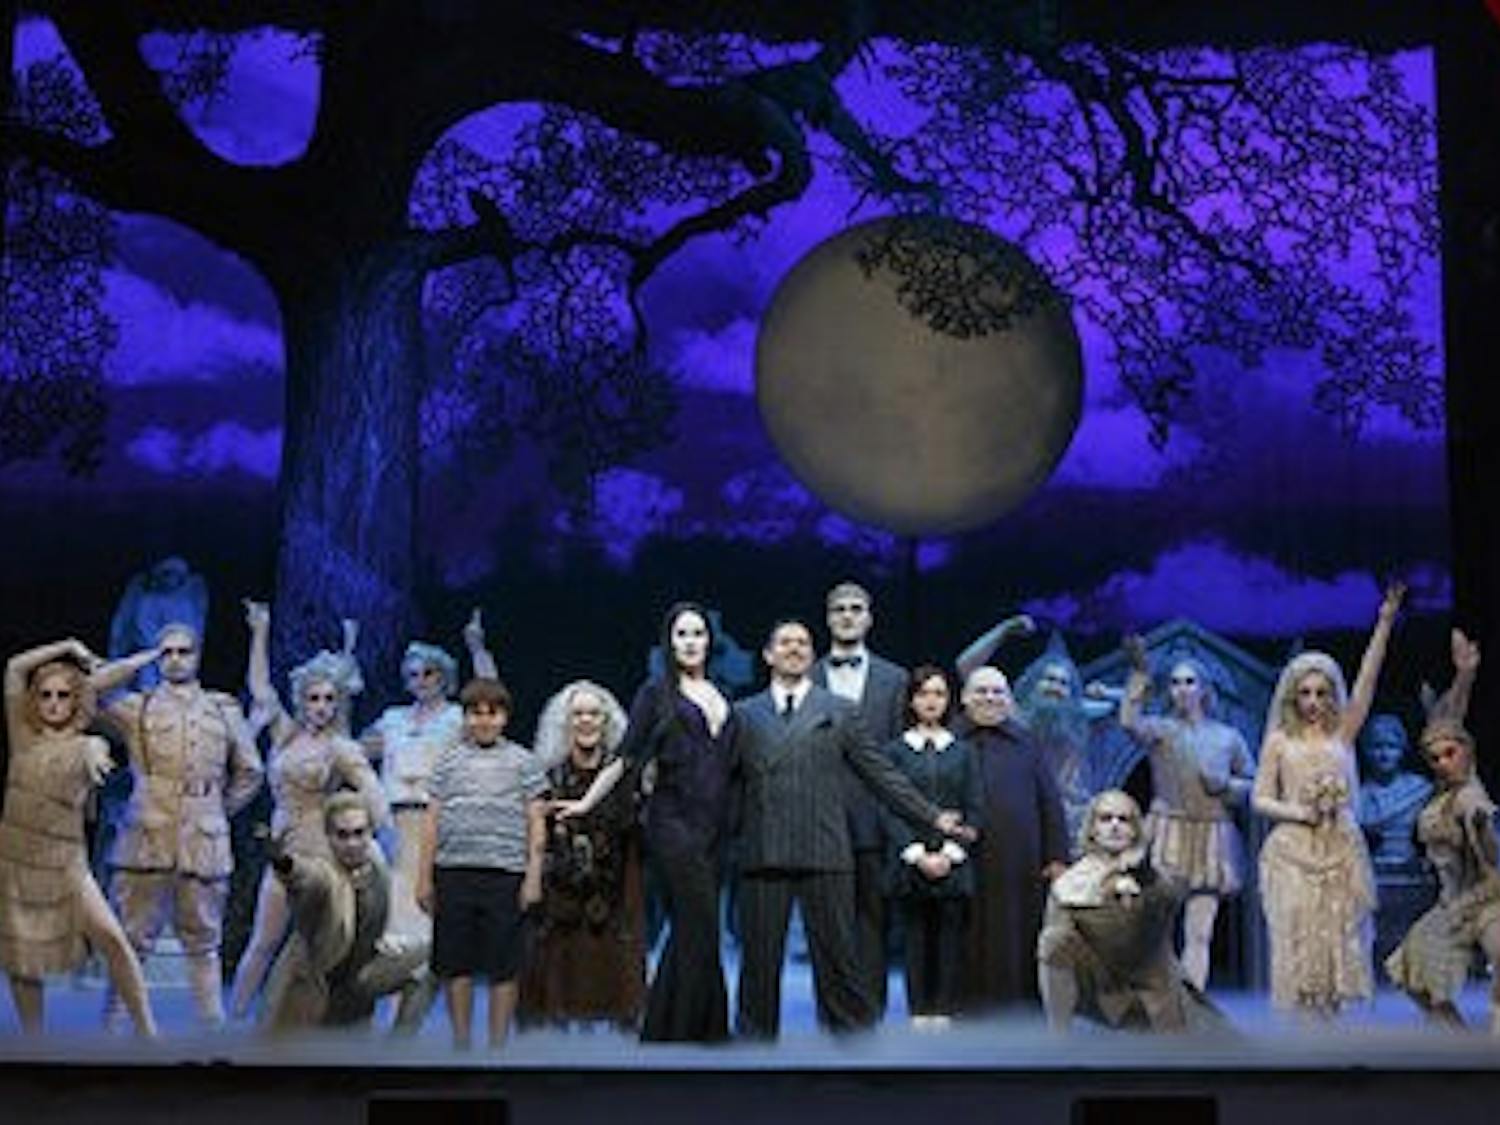 Addams Family Musical Comedy comes to Opelika